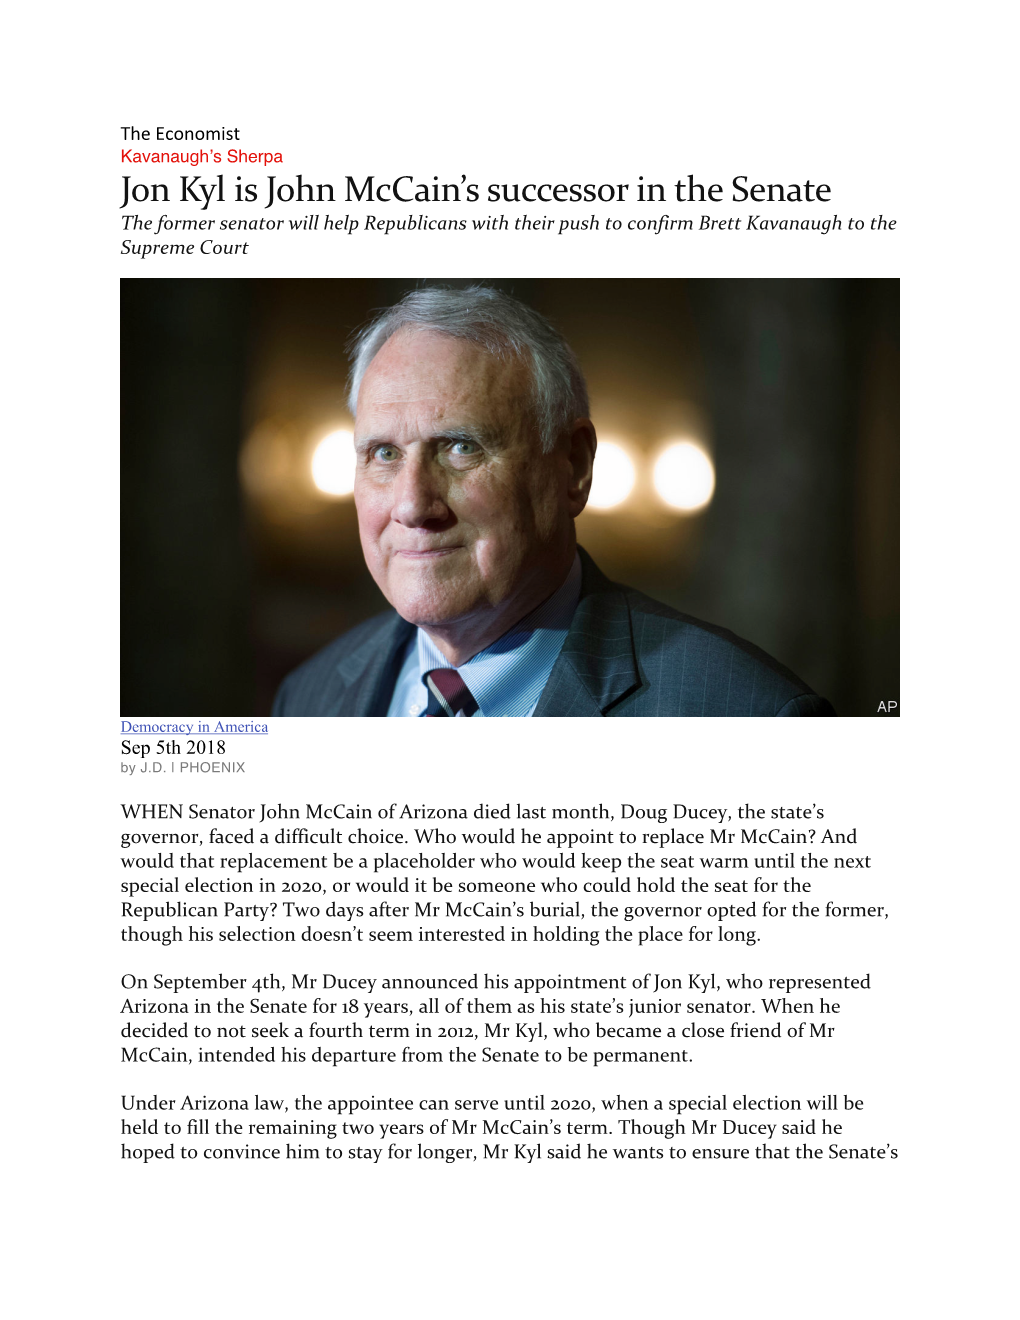 Jon Kyl Is John Mccain's Successor in the Senate